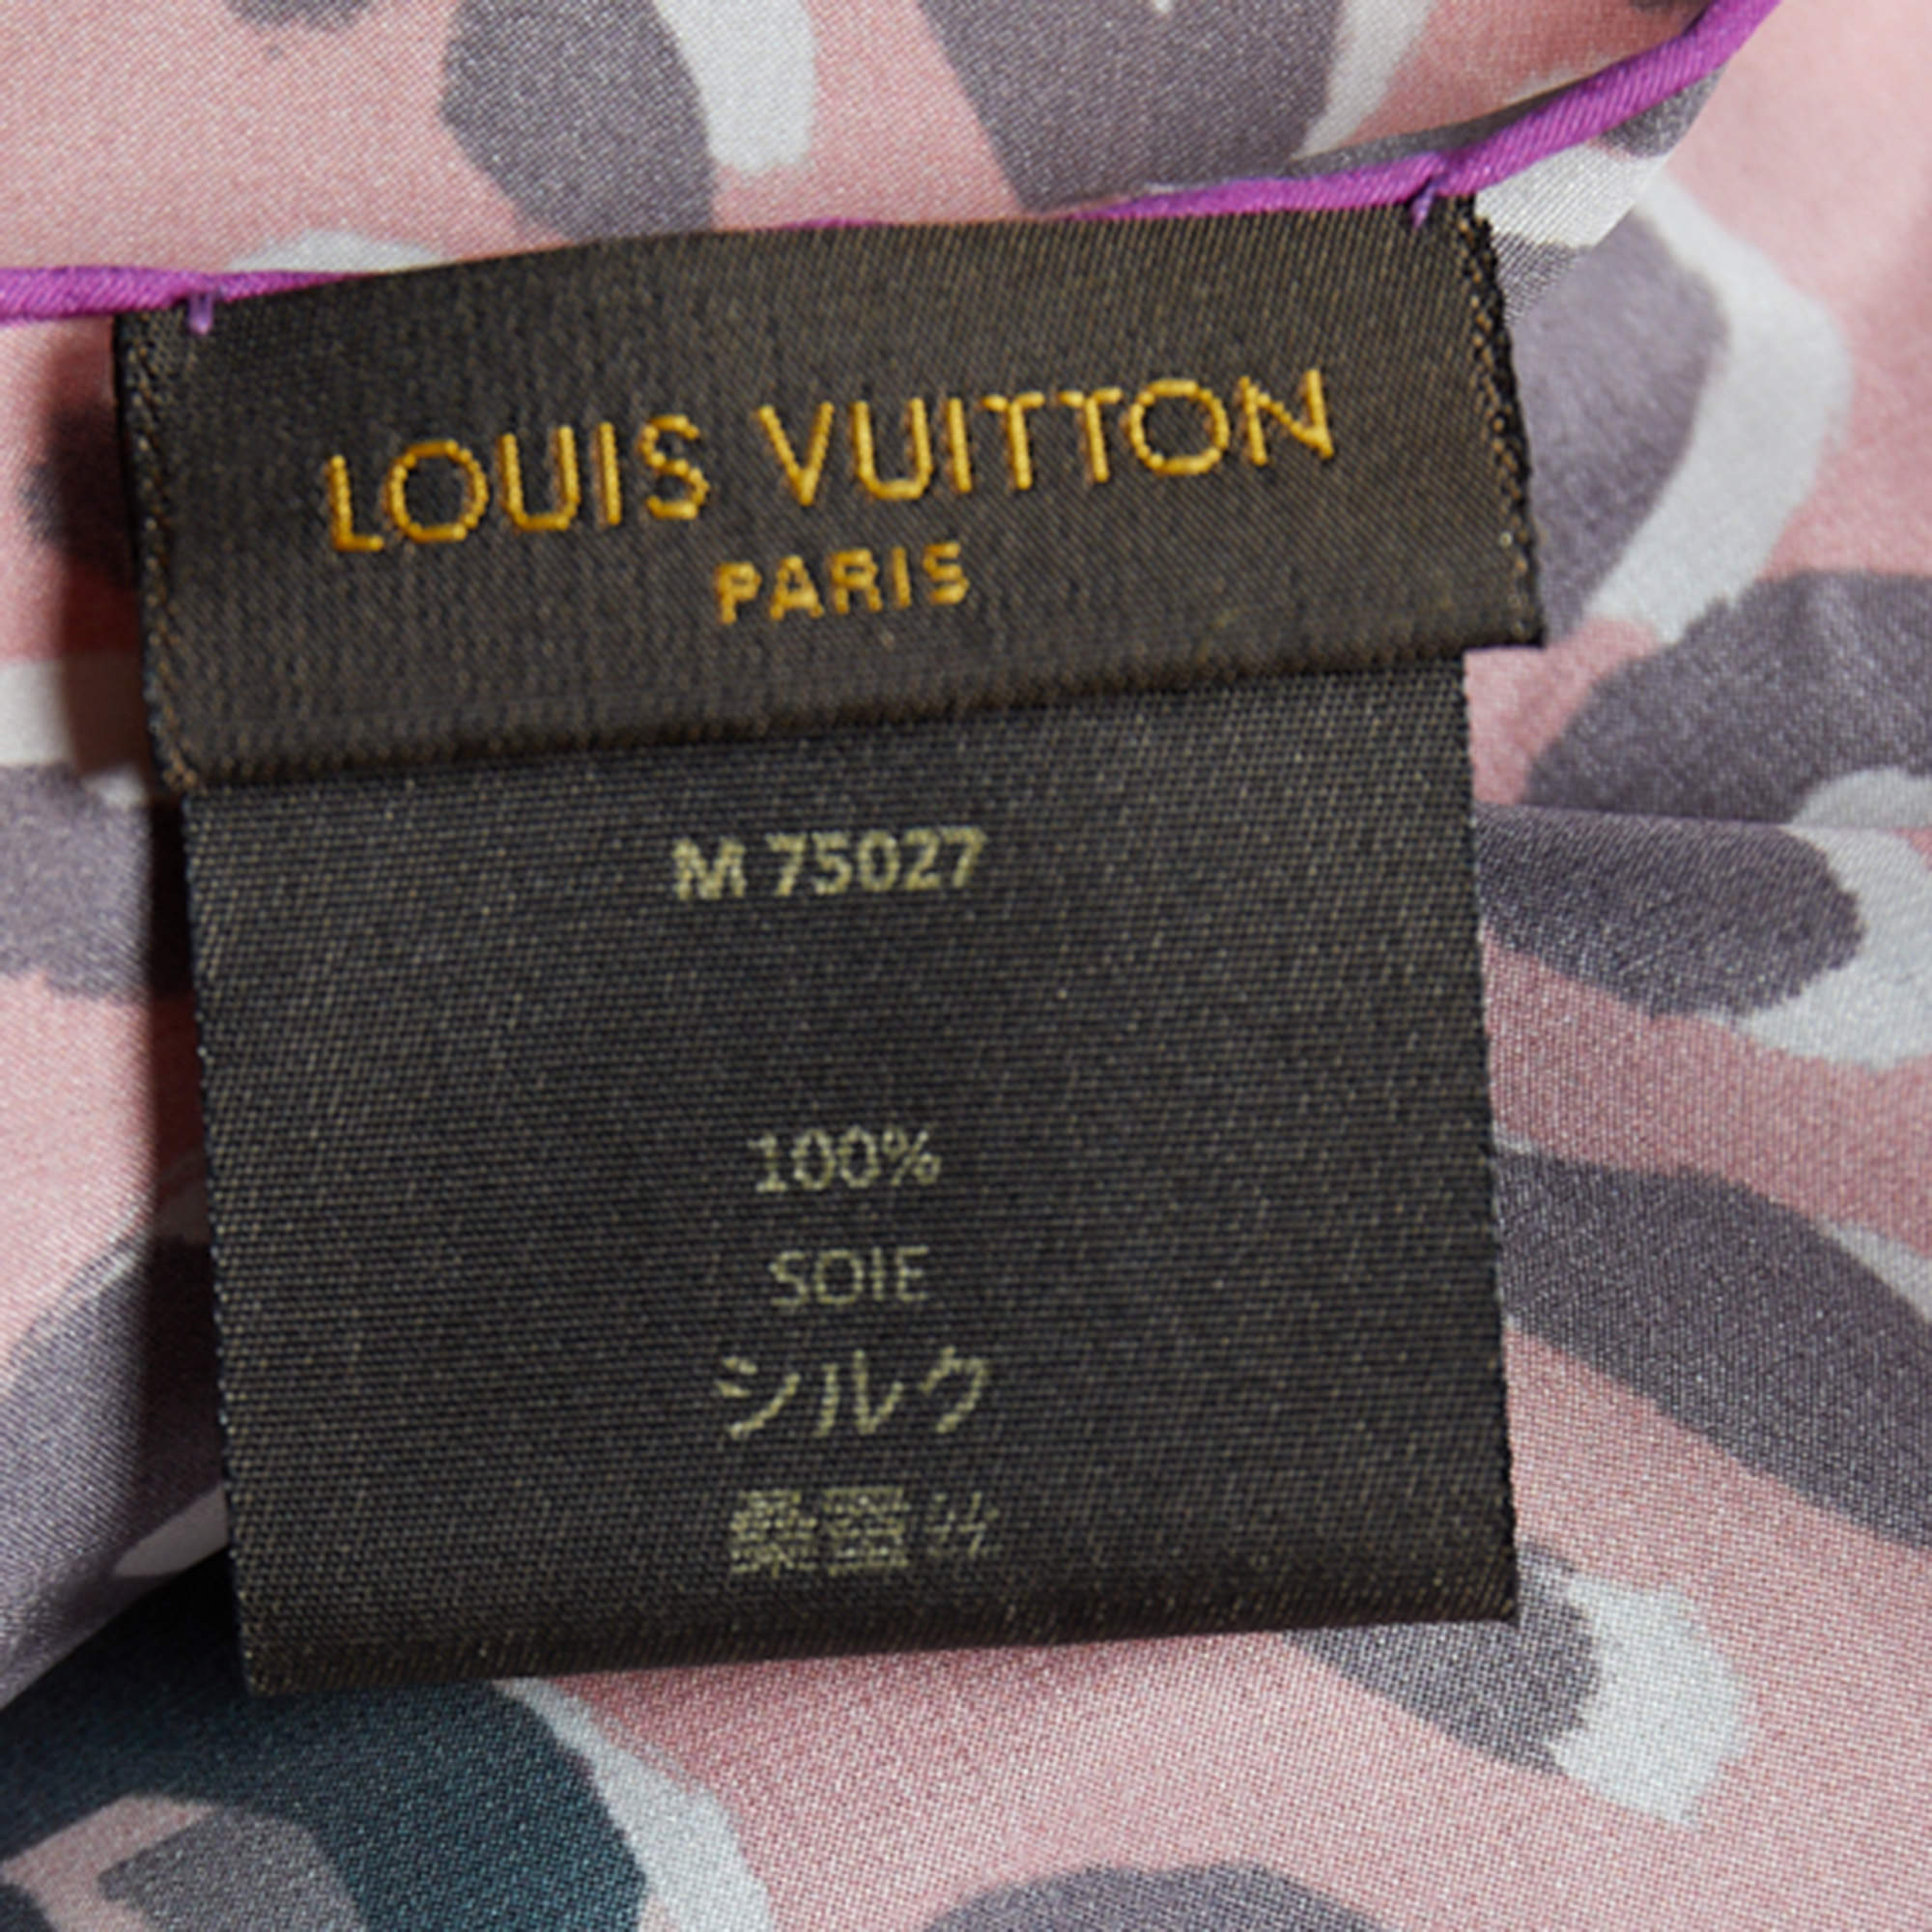 Louis Vuitton Multicolour Vuittonite Chinese New Year Rat Print Square Silk  Scarf Louis Vuitton